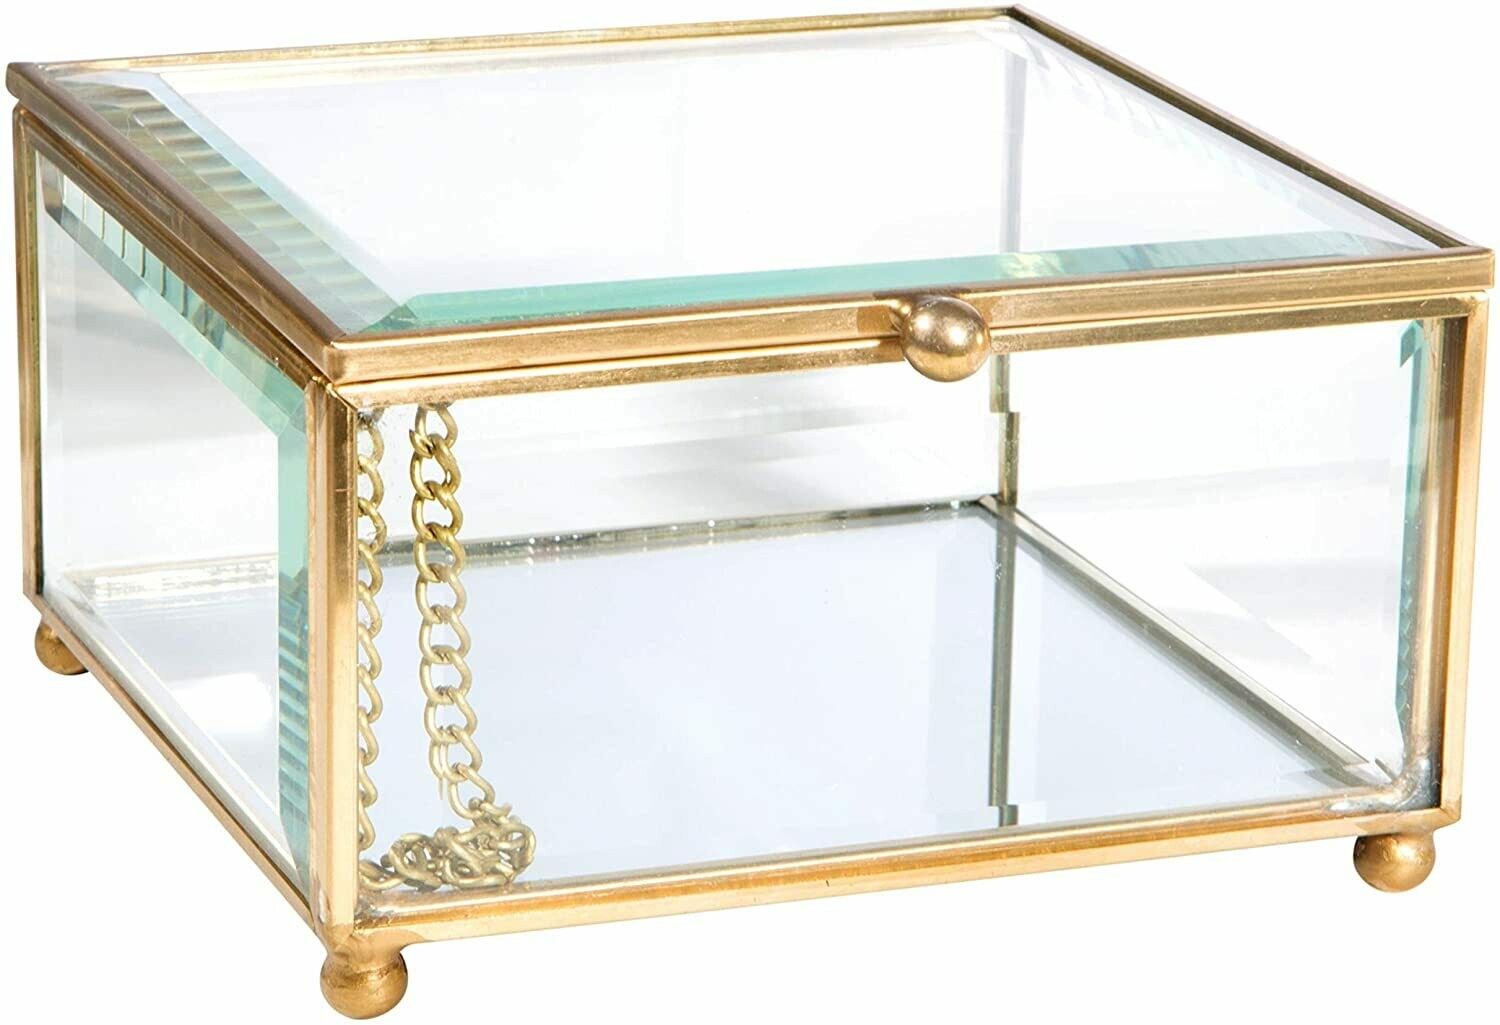 Home Details Vintage Mirrored Bottom Glass Keepsake Box